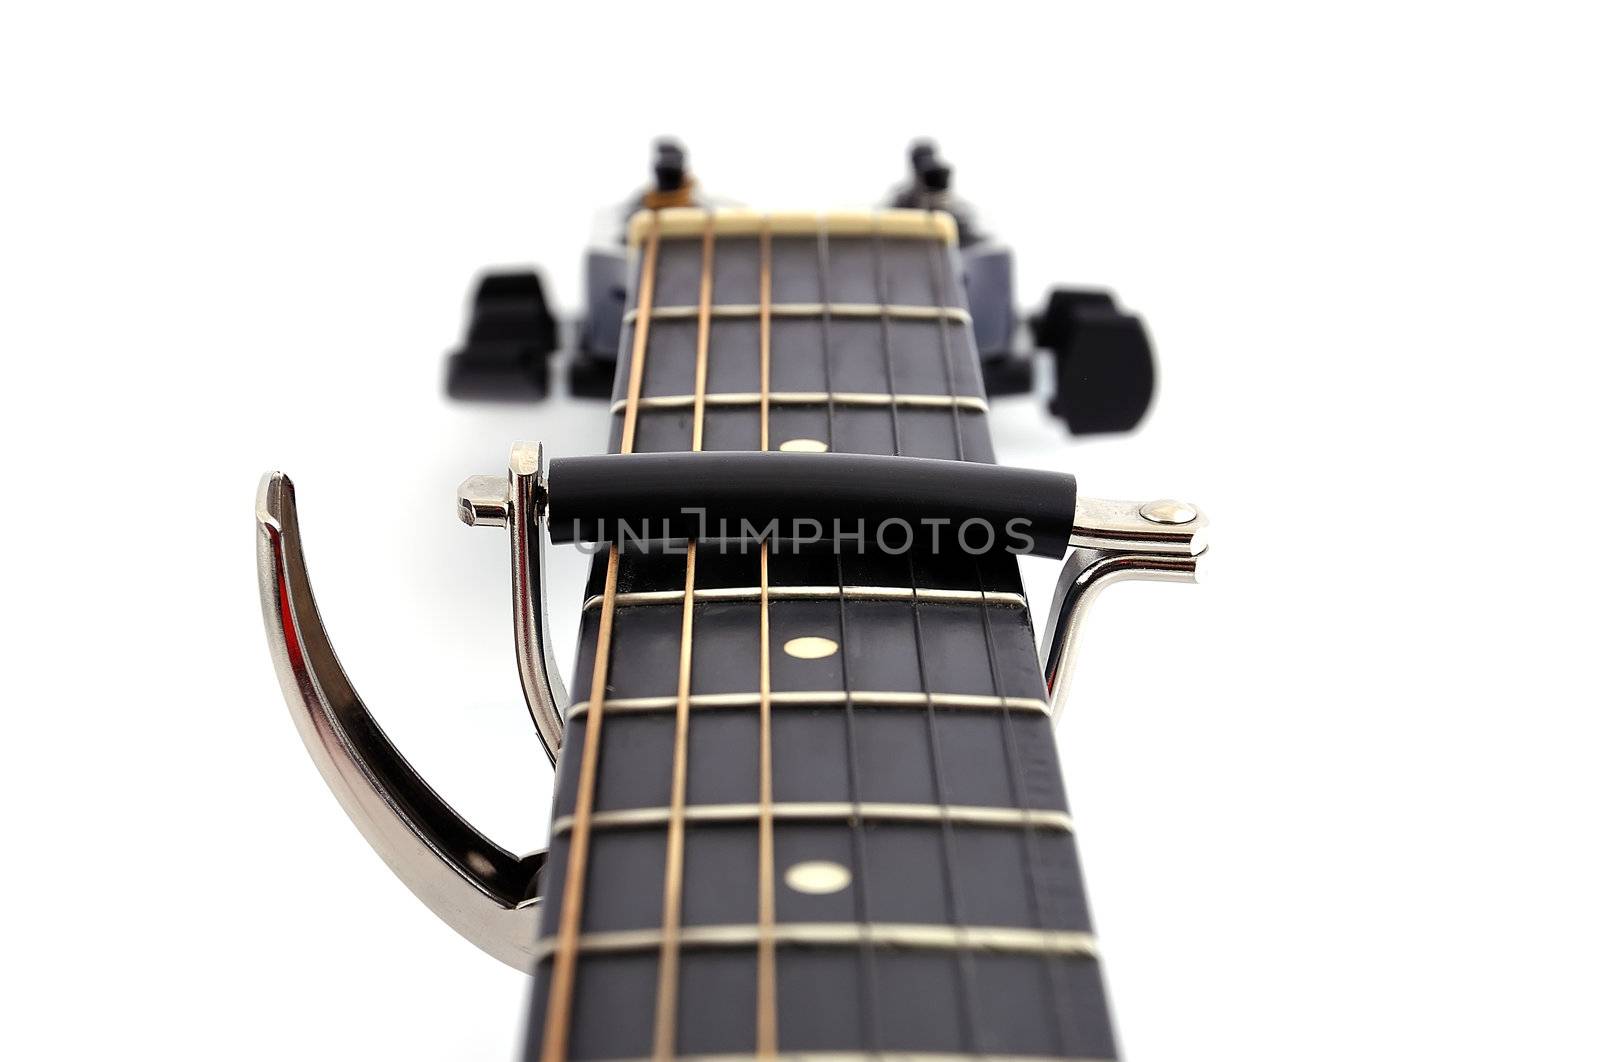 kapodastr jammed on an guitar by vetkit